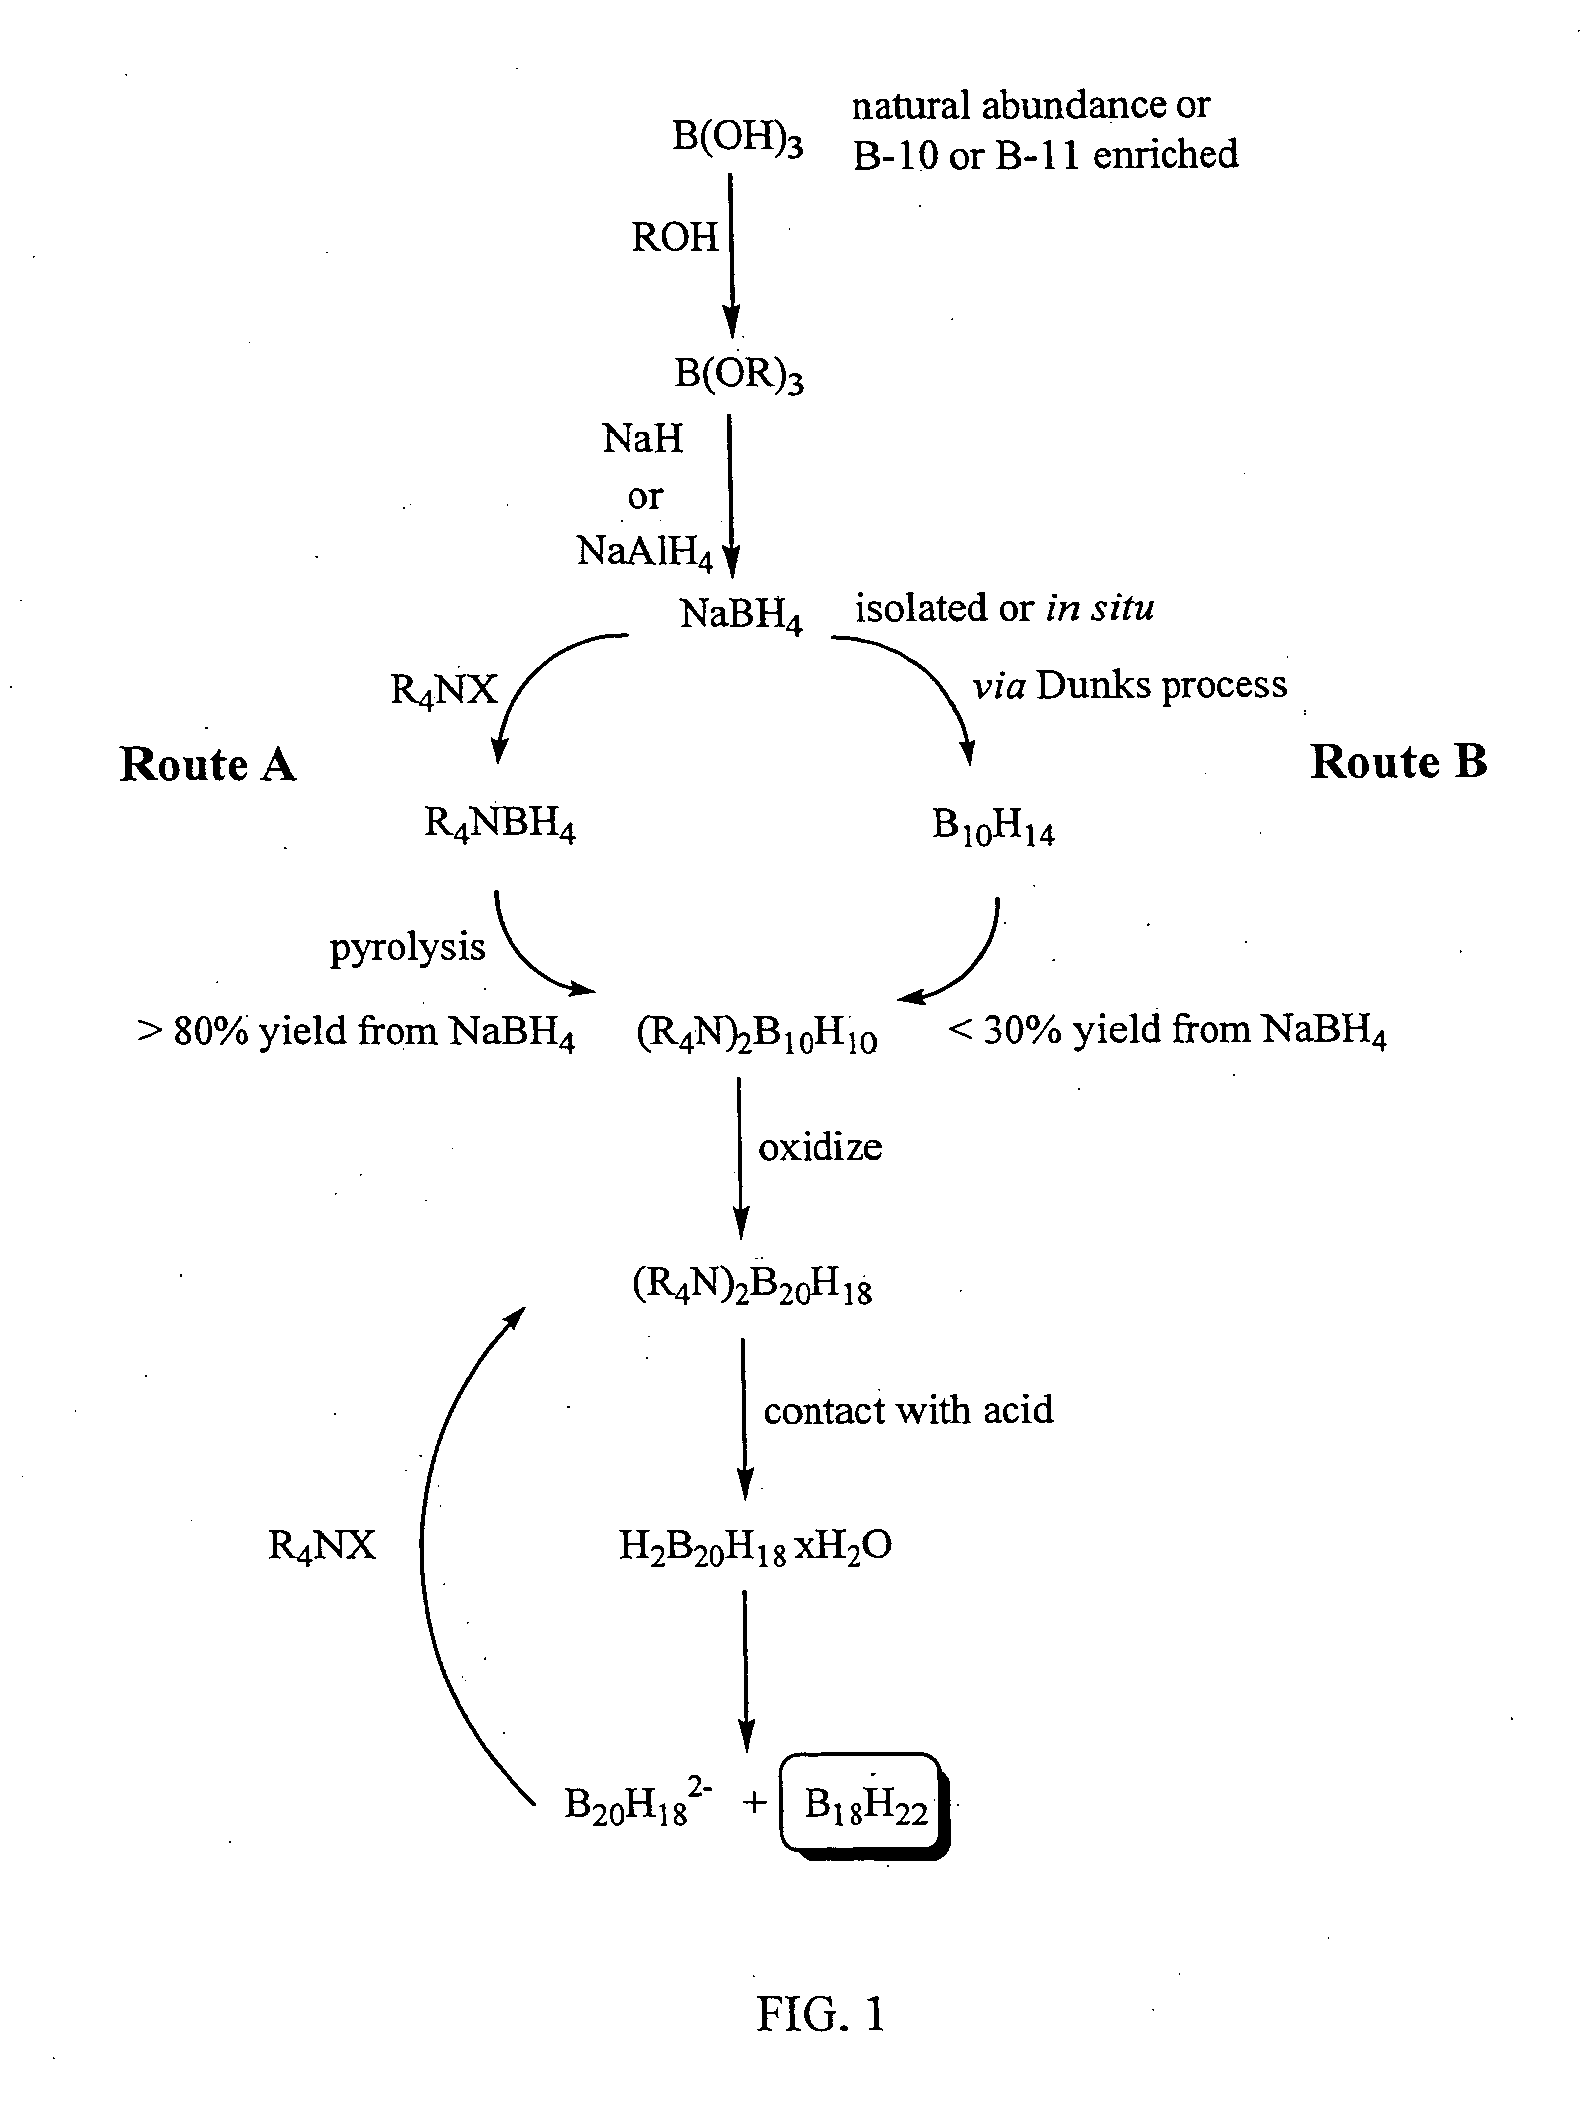 Method of production of B10H102-ammonium salts and methods of production of B18H22